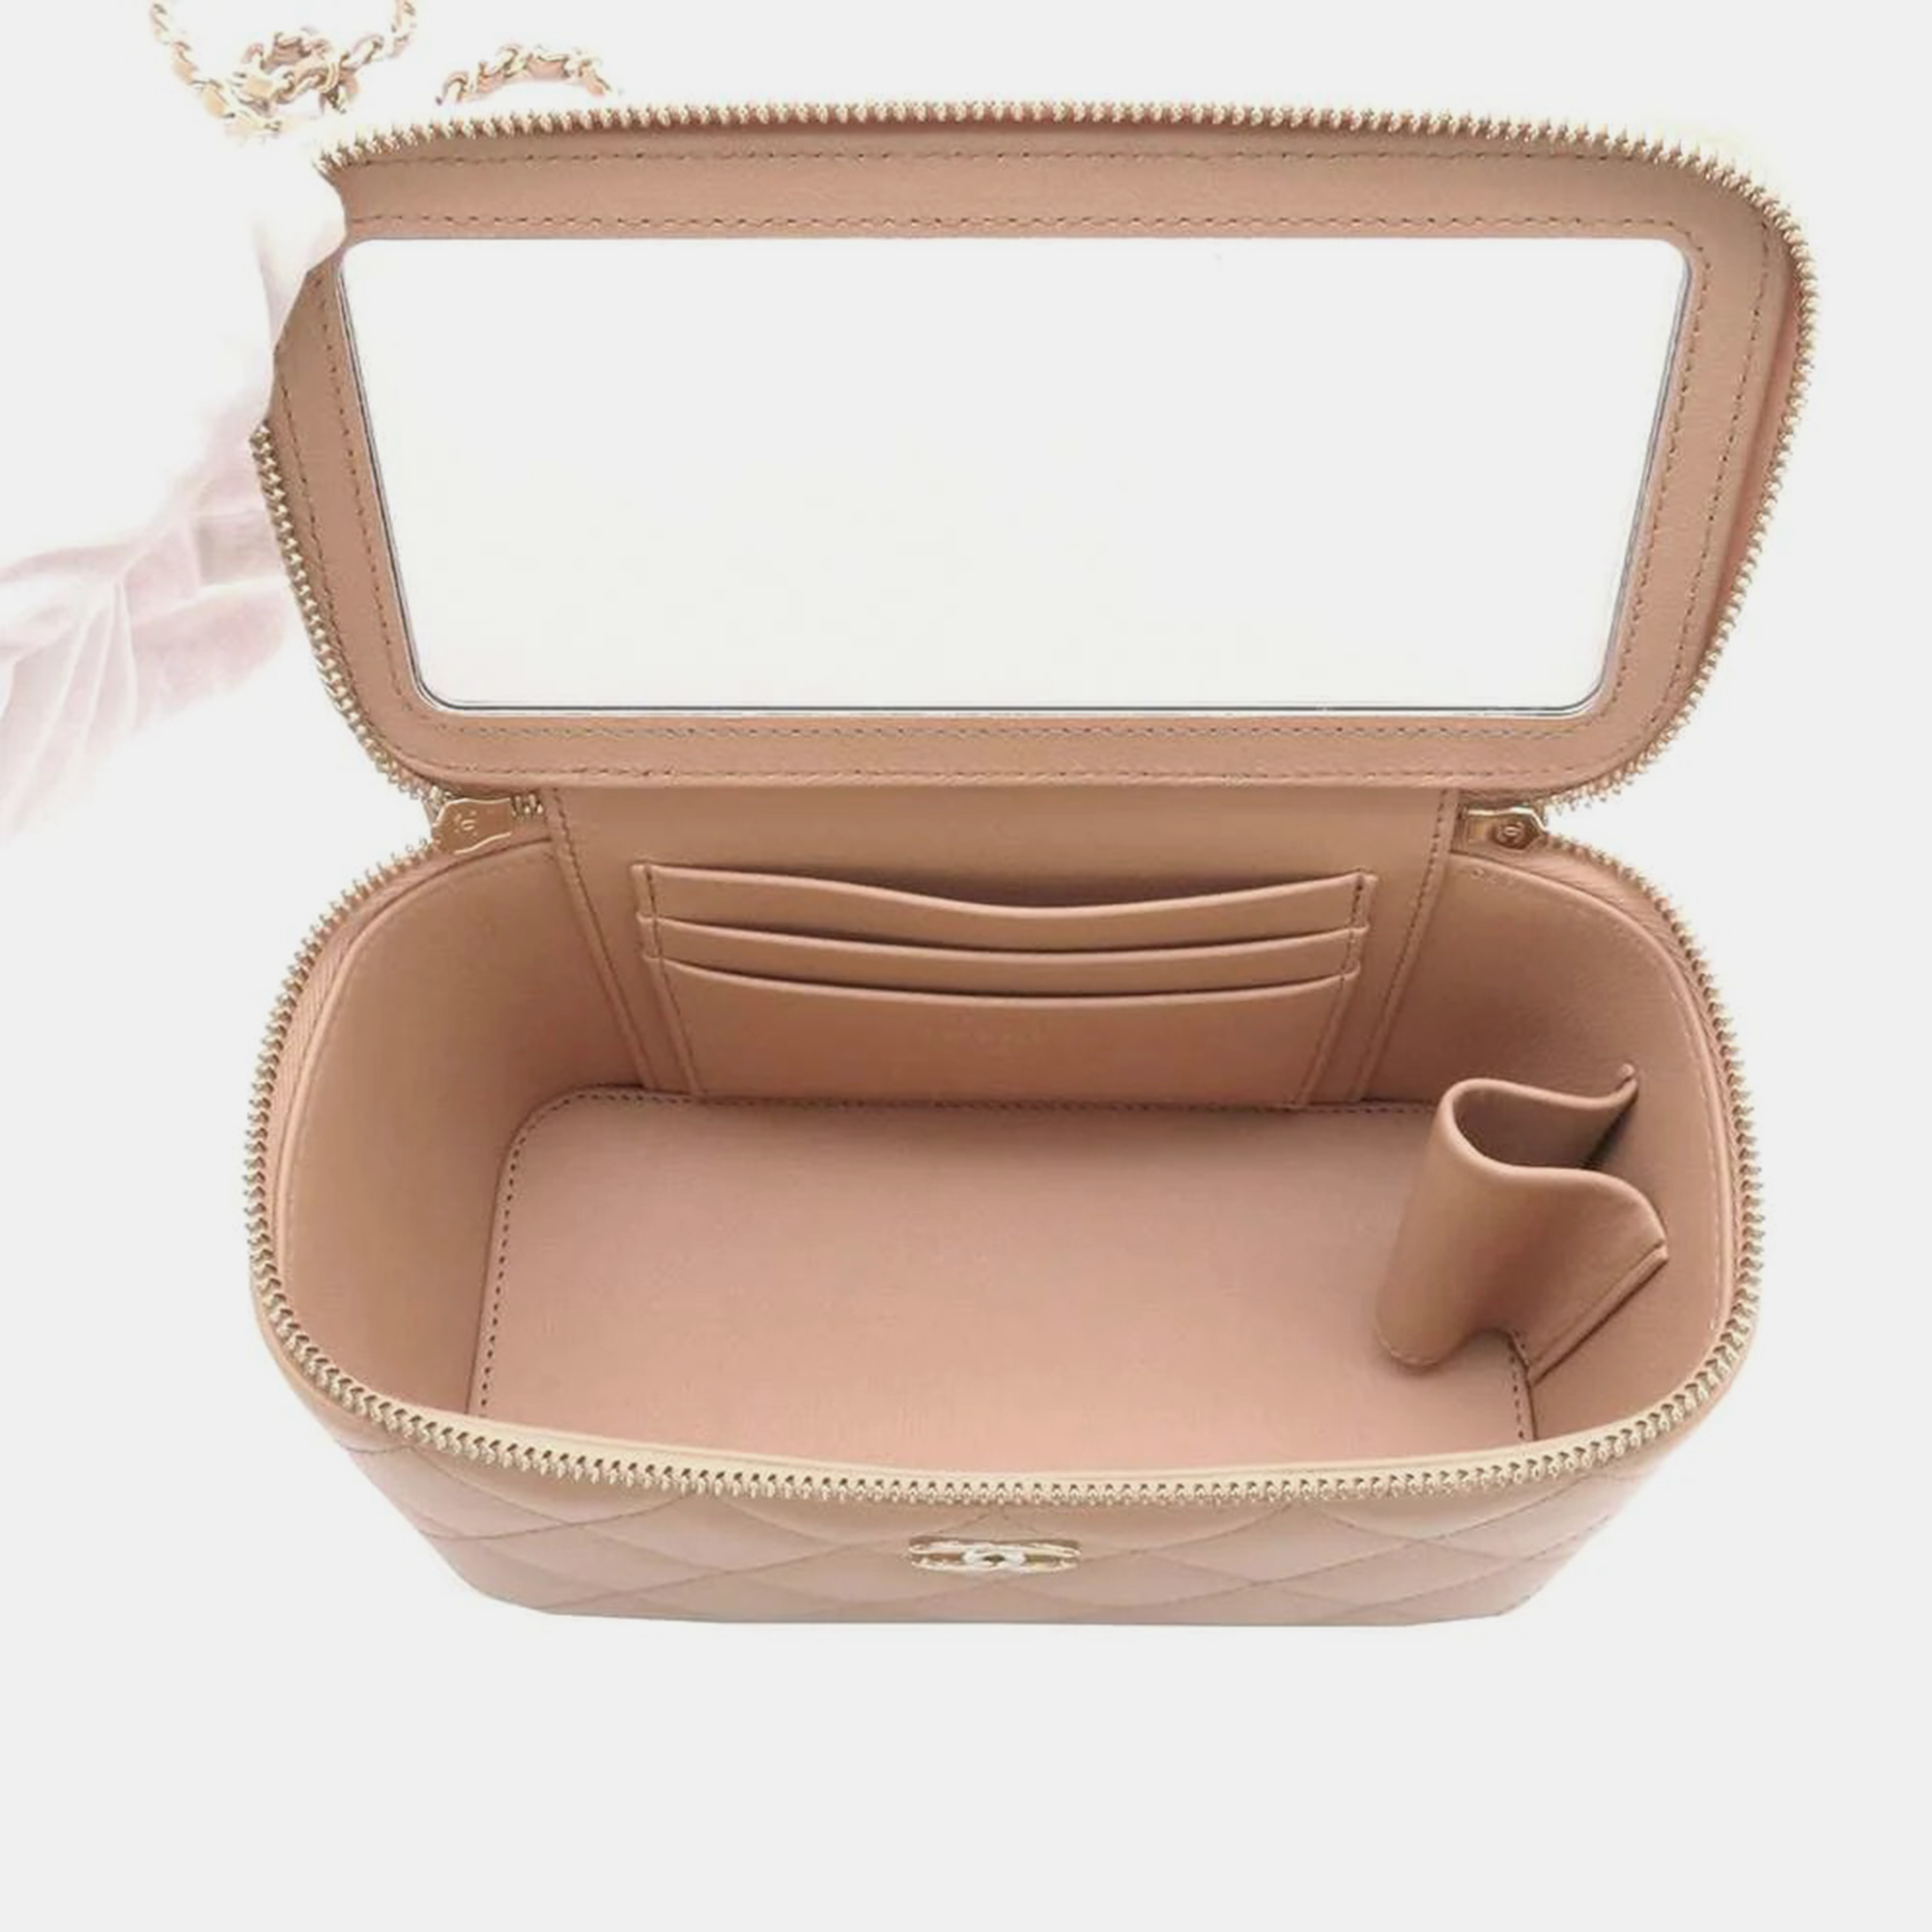 Chanel Beige Leather Vanity Top Handle Bag